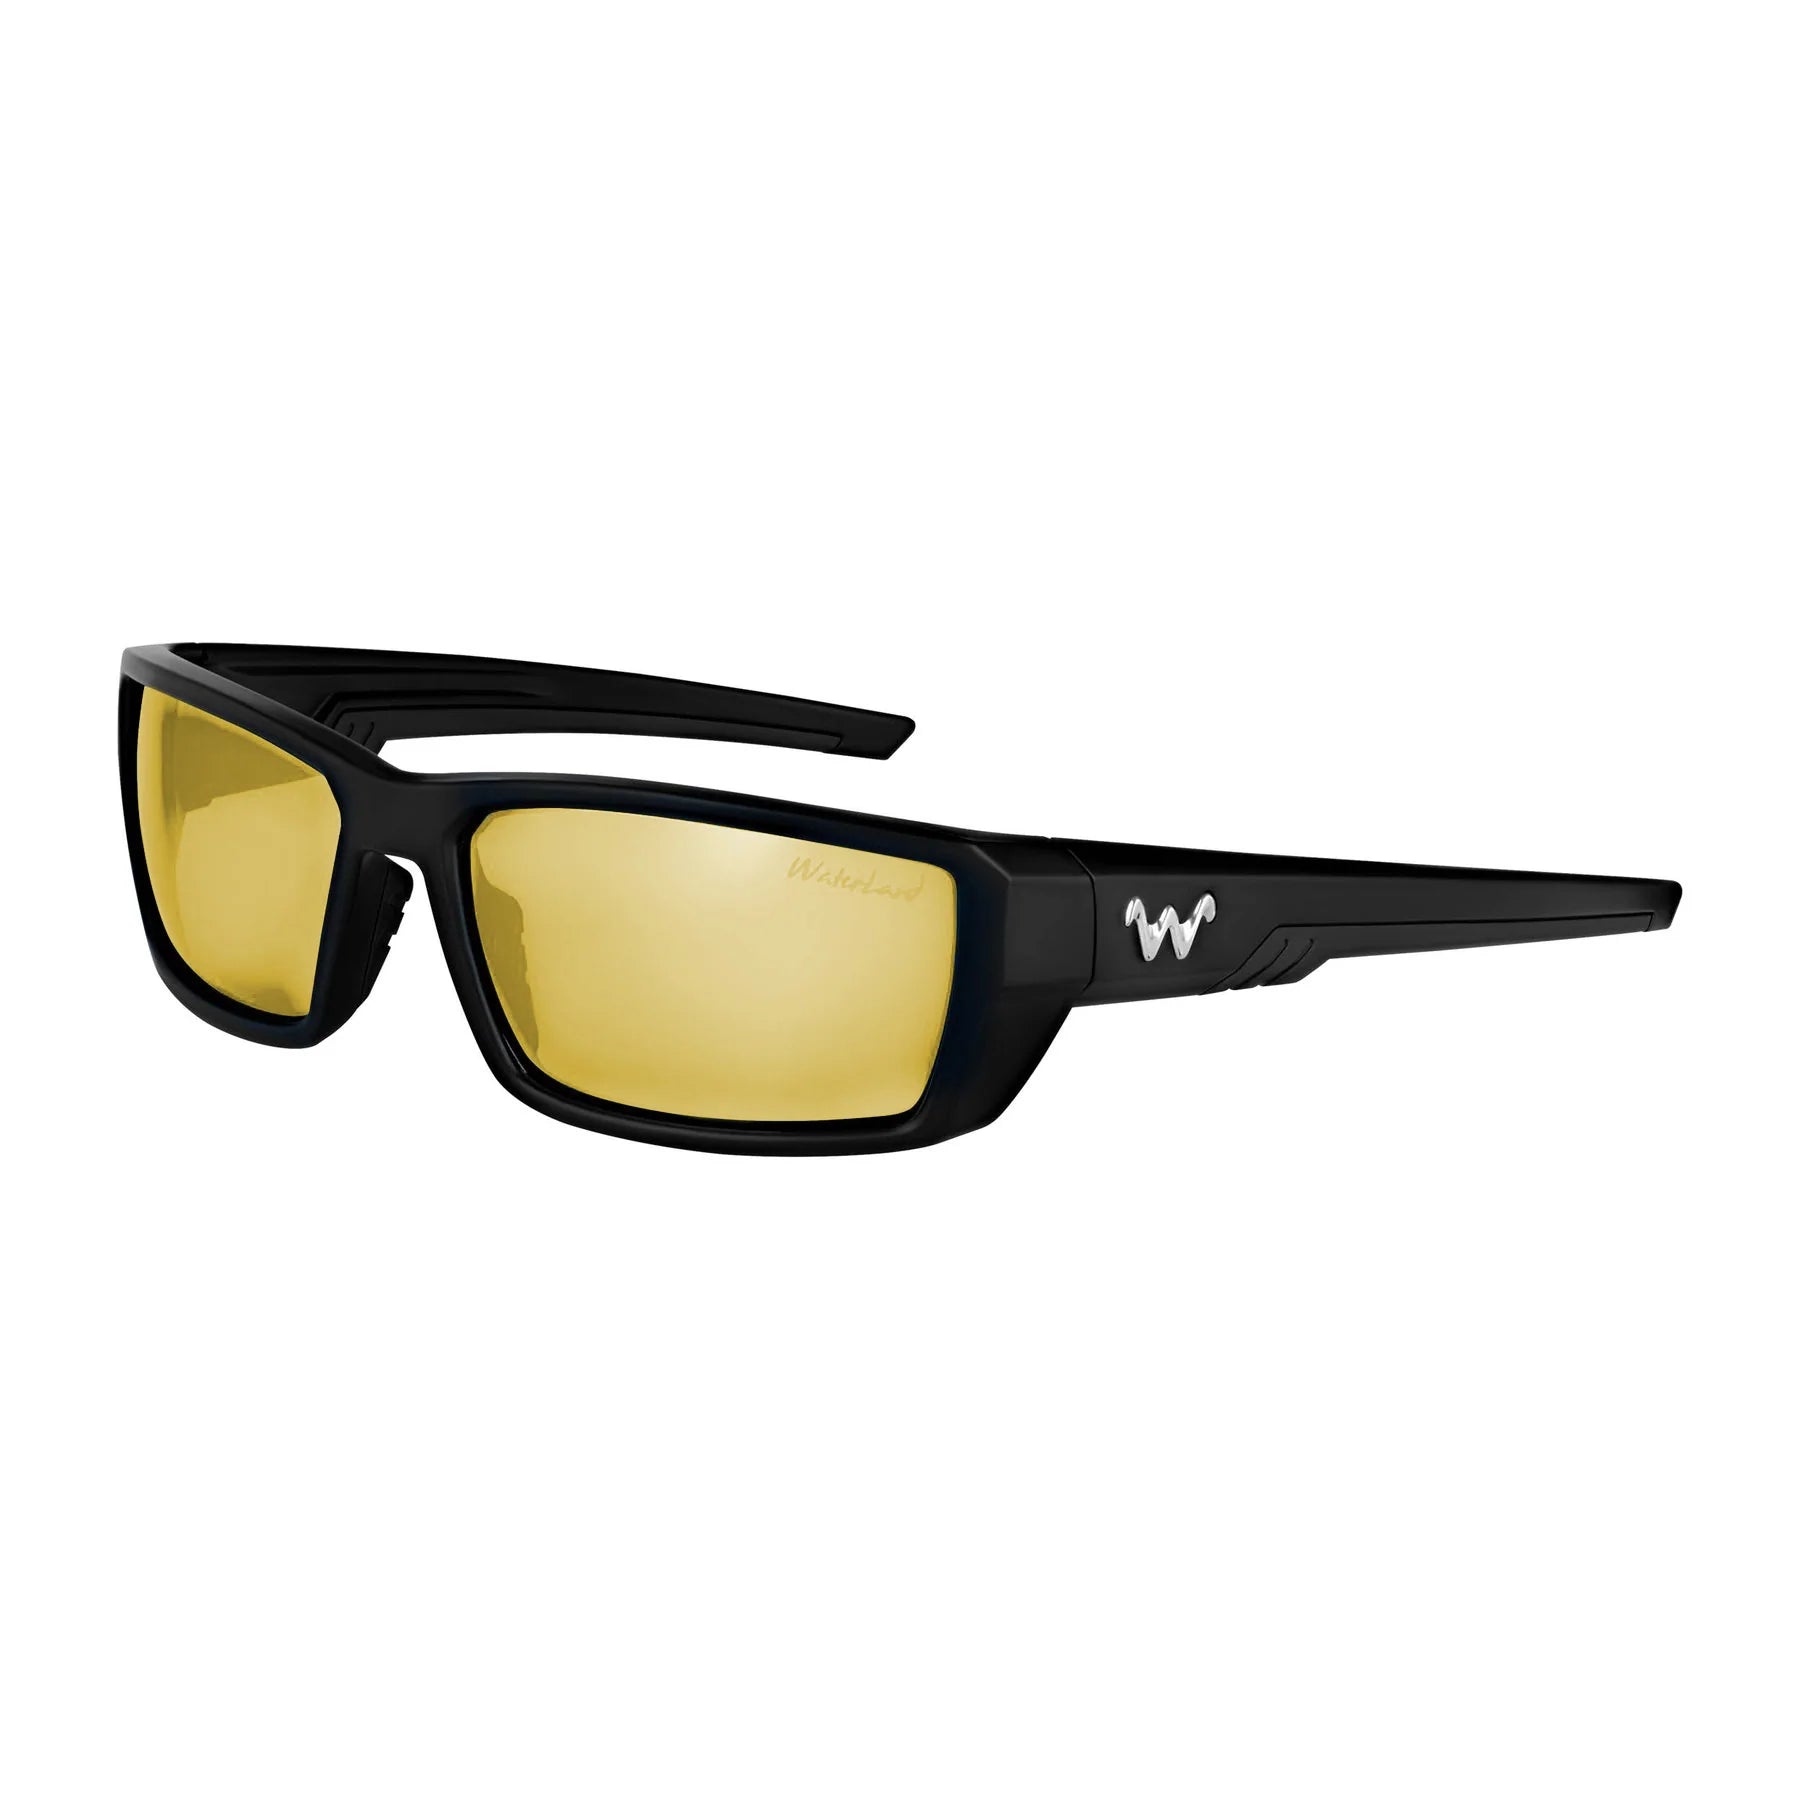 Waterland Ashor Sunglasses Mineral Glass / Black Frame / Golden Light Mirror